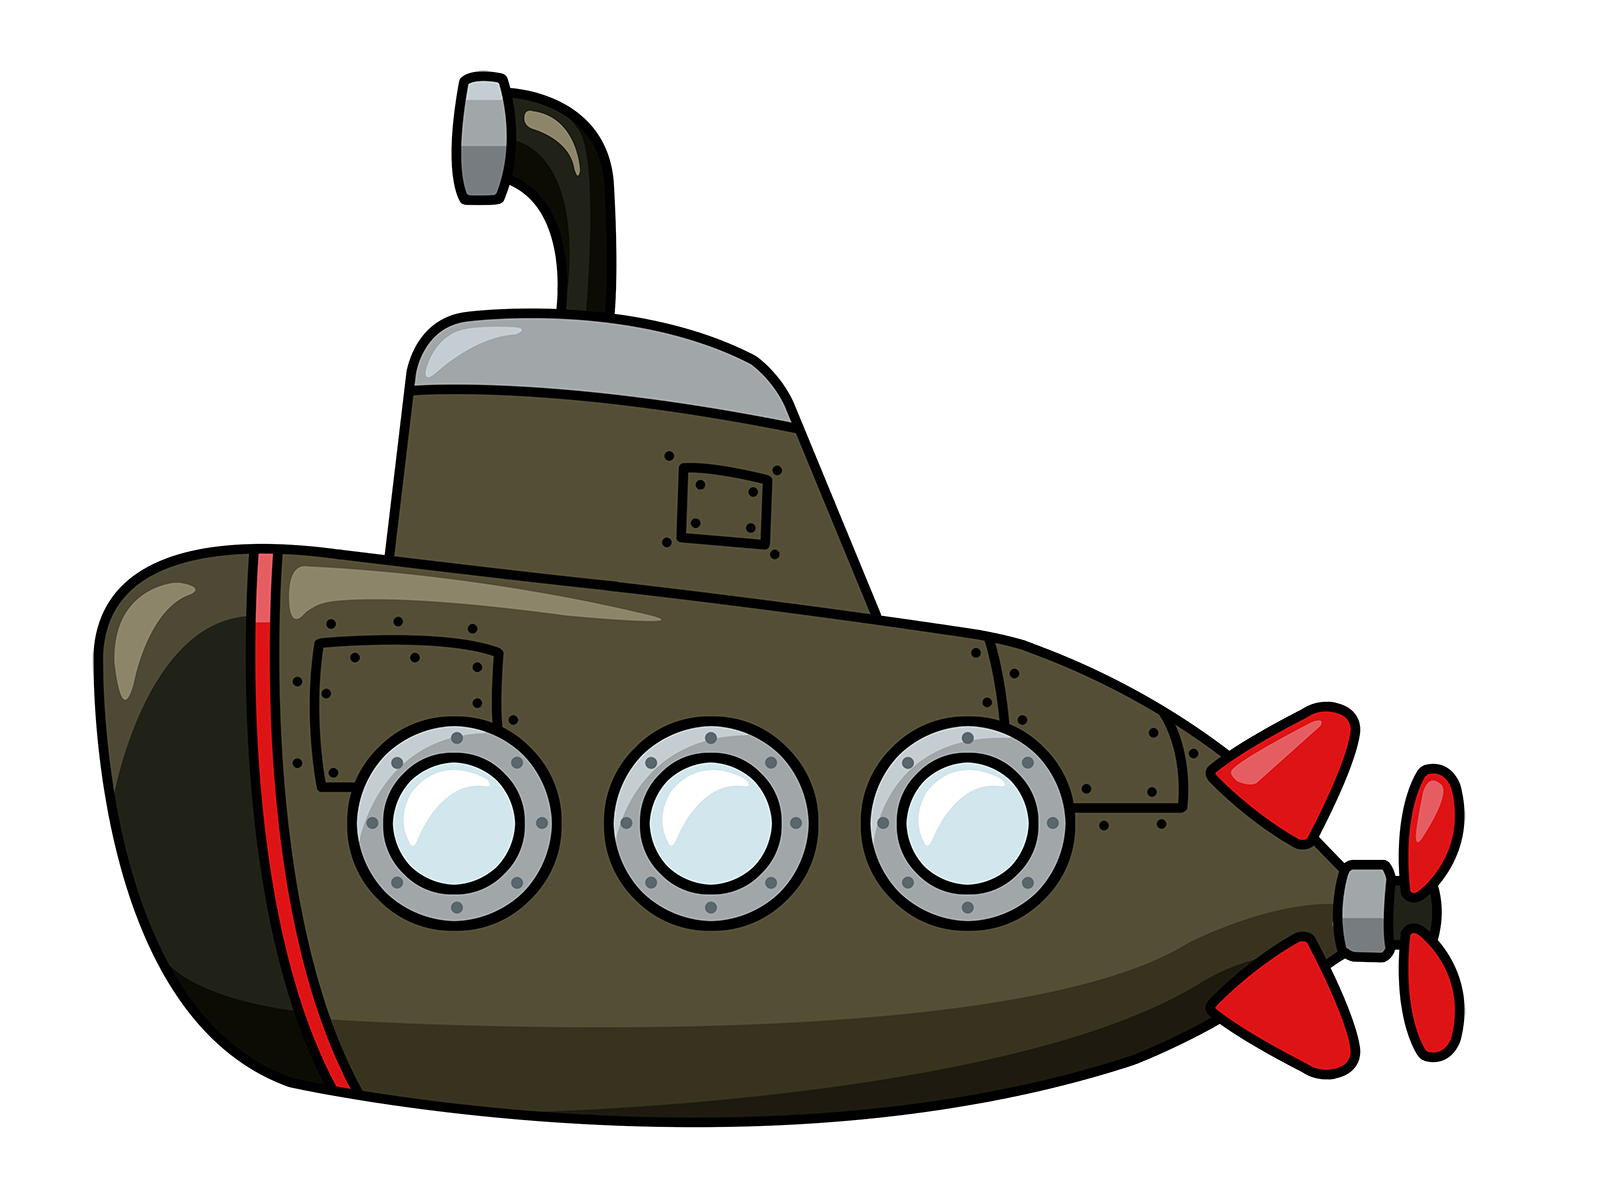 Cartoon submarine clipart